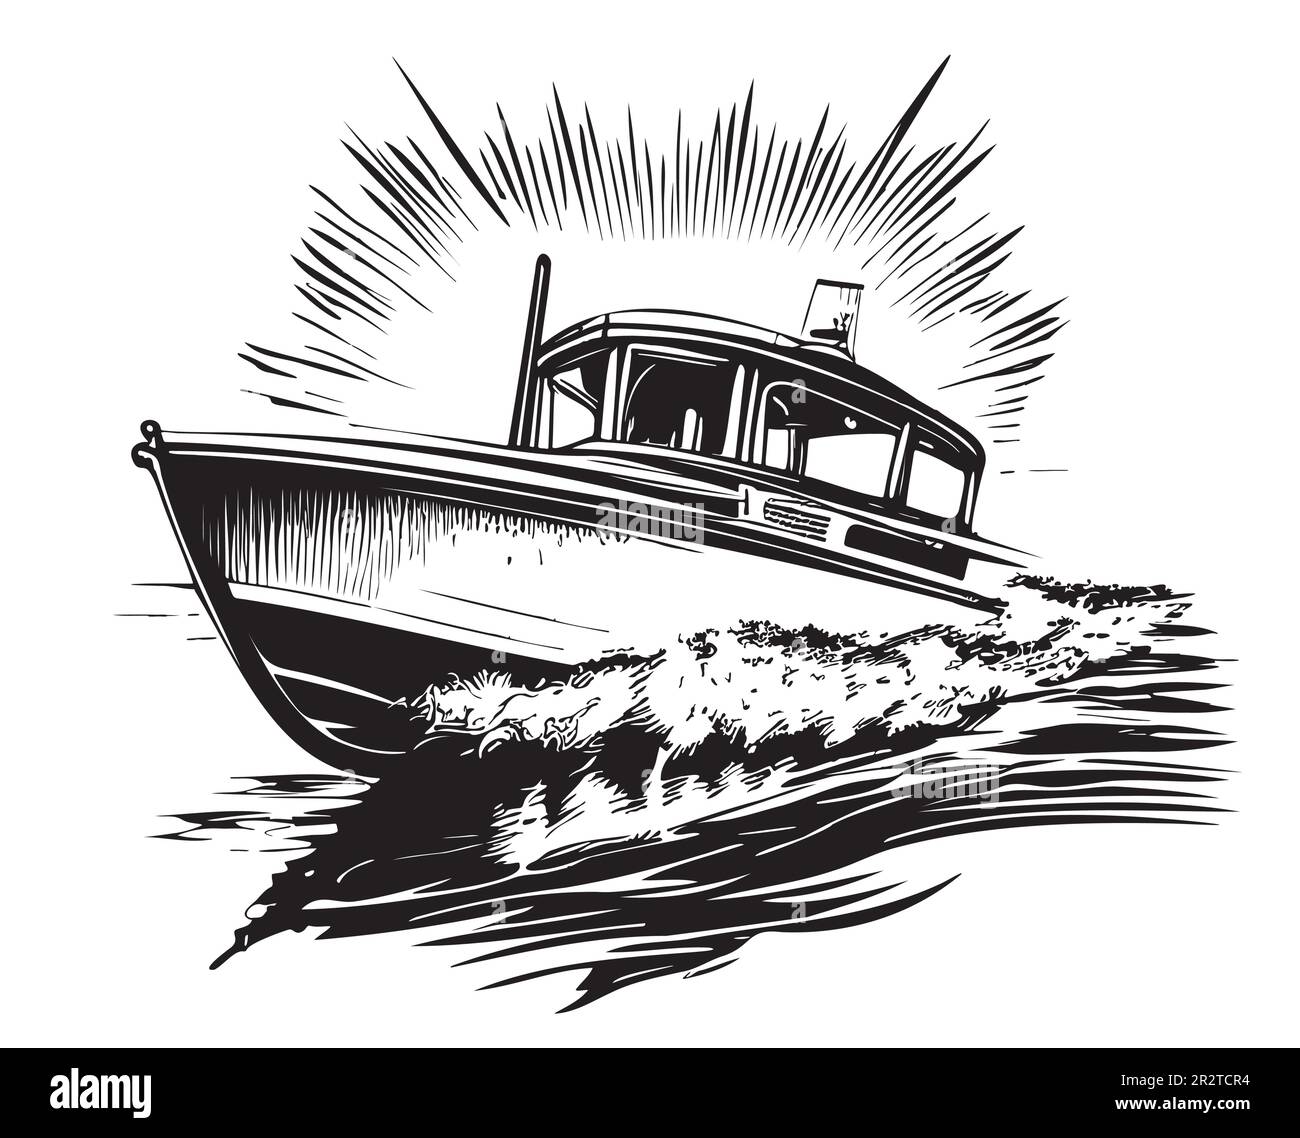 Boat on waves hand drawn sketch Vector illustration Sea boat Stock Vector